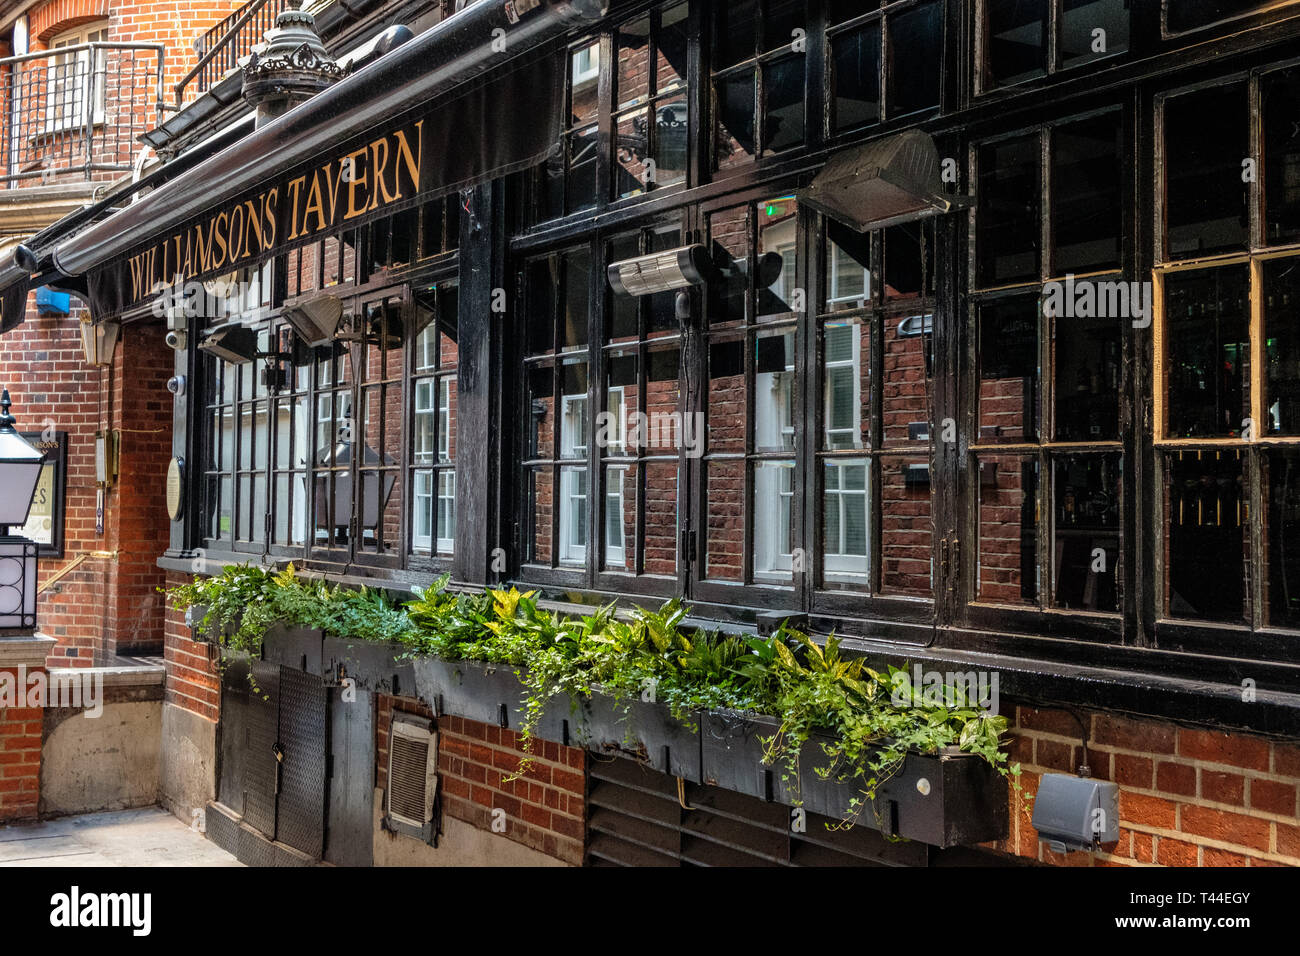 The Williamsons Tavern, 1 Groveland Court, London Stock Photo